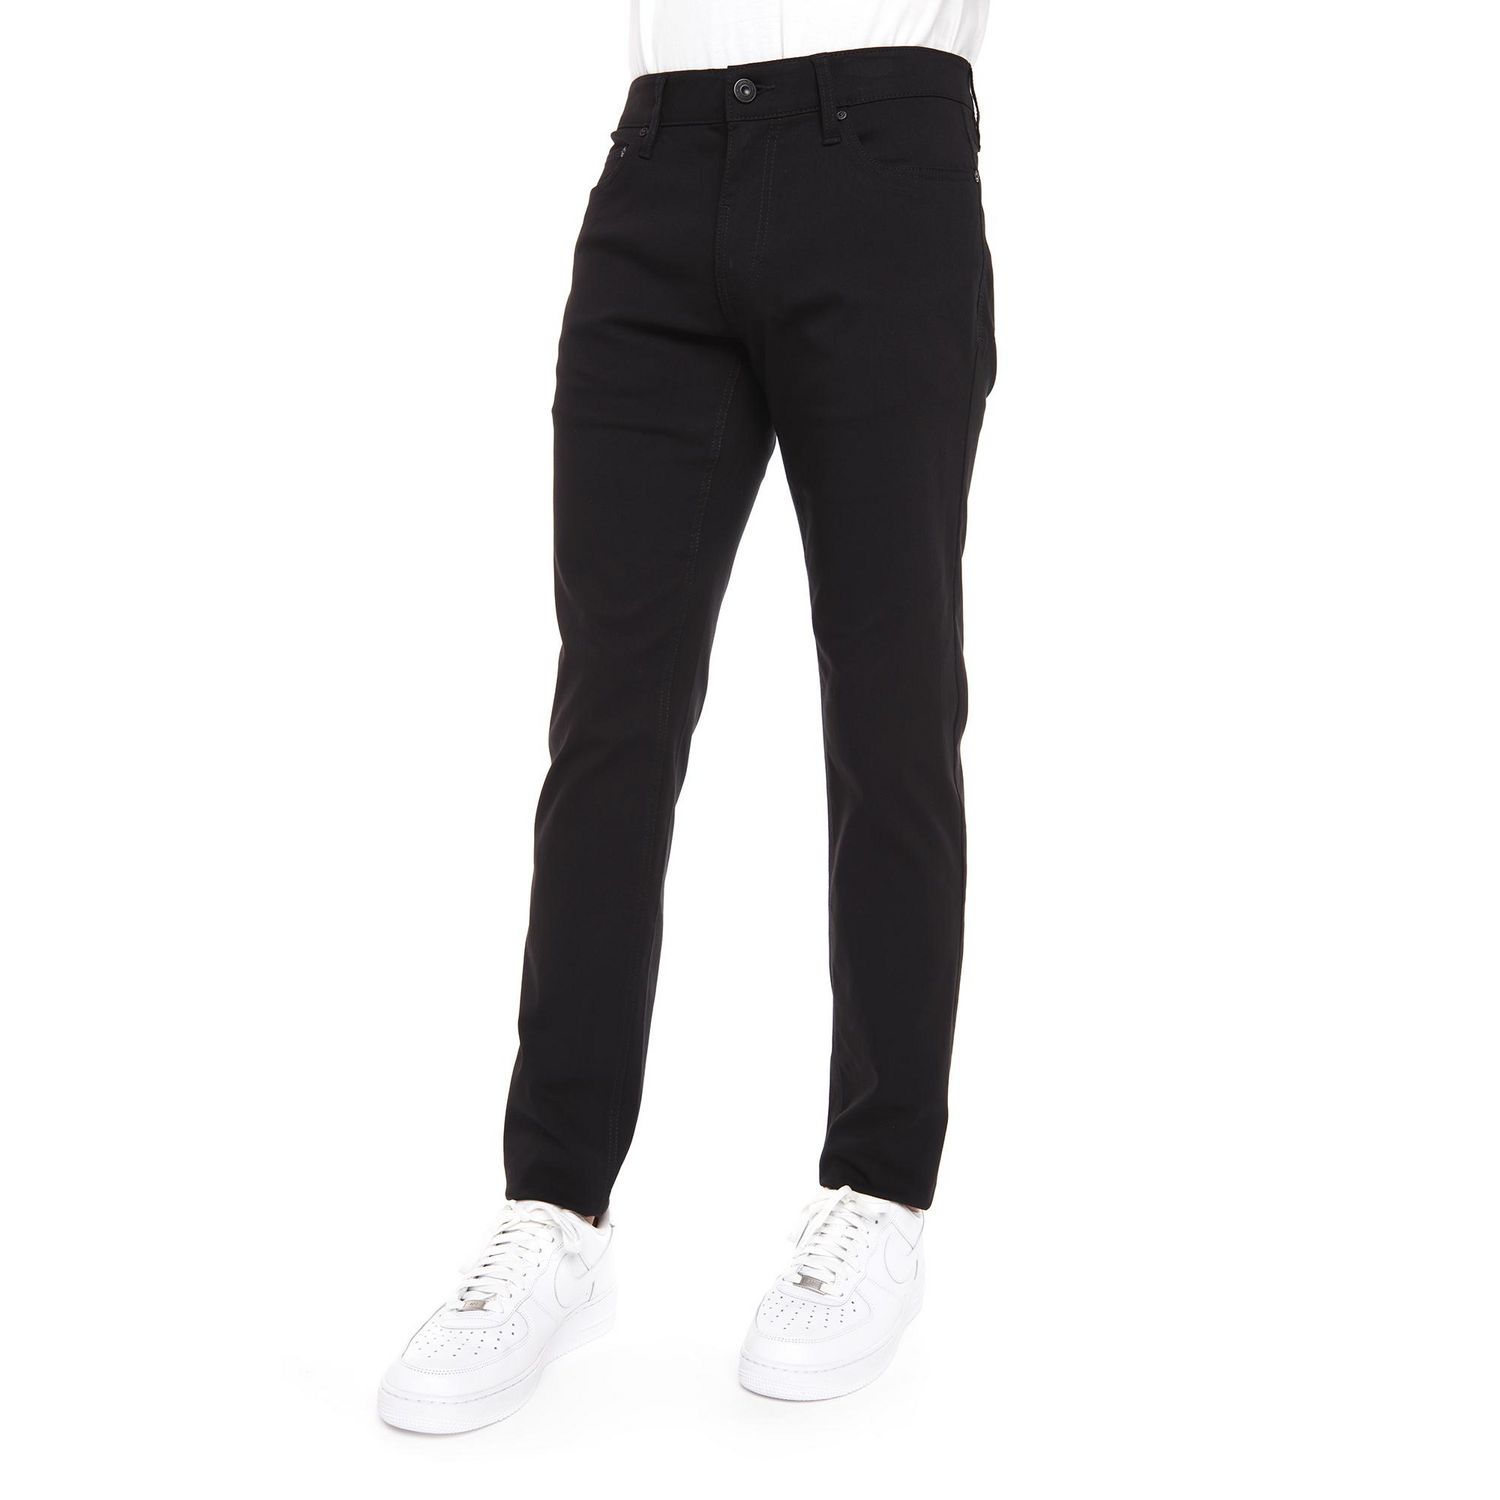 Dark Black Men's 5 Pocket Comfort Stretch Pant | Walmart Canada